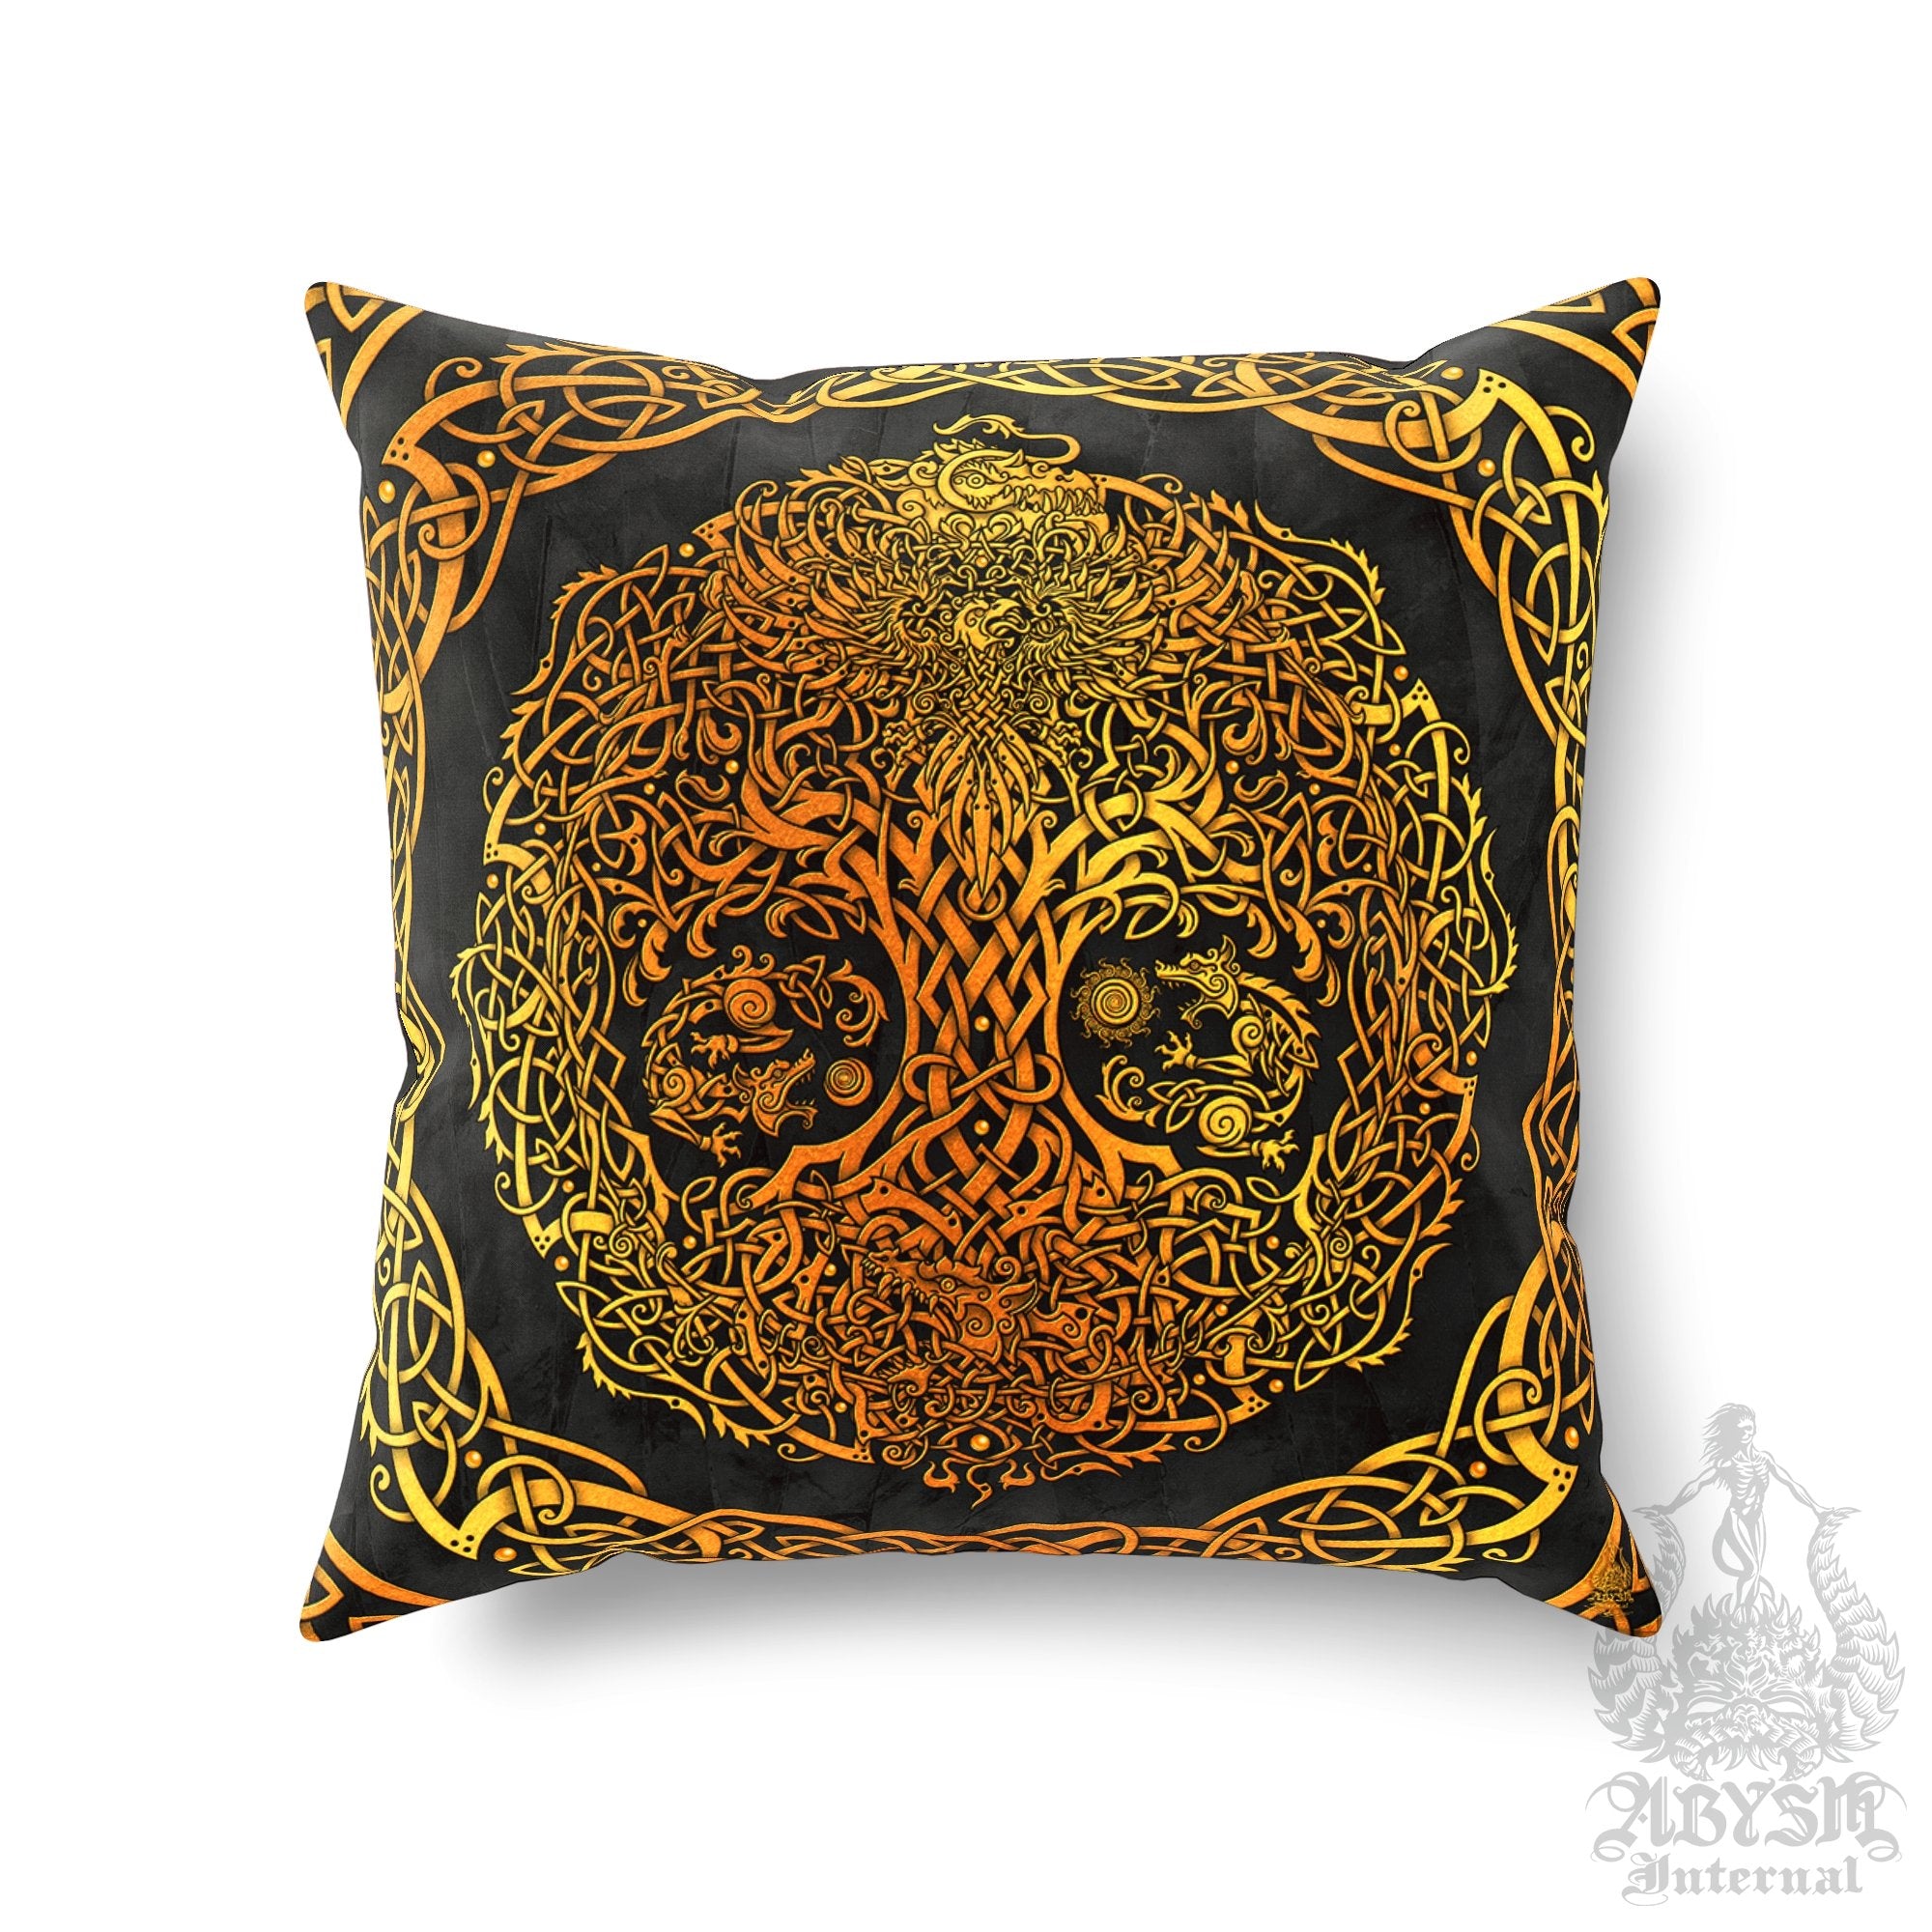 Viking Throw Pillow, Decorative Accent Cushion, Yggdrasil, Norse Decor, Nordic Art, Alternative Home - Tree of Life, Gold & Black - Abysm Internal